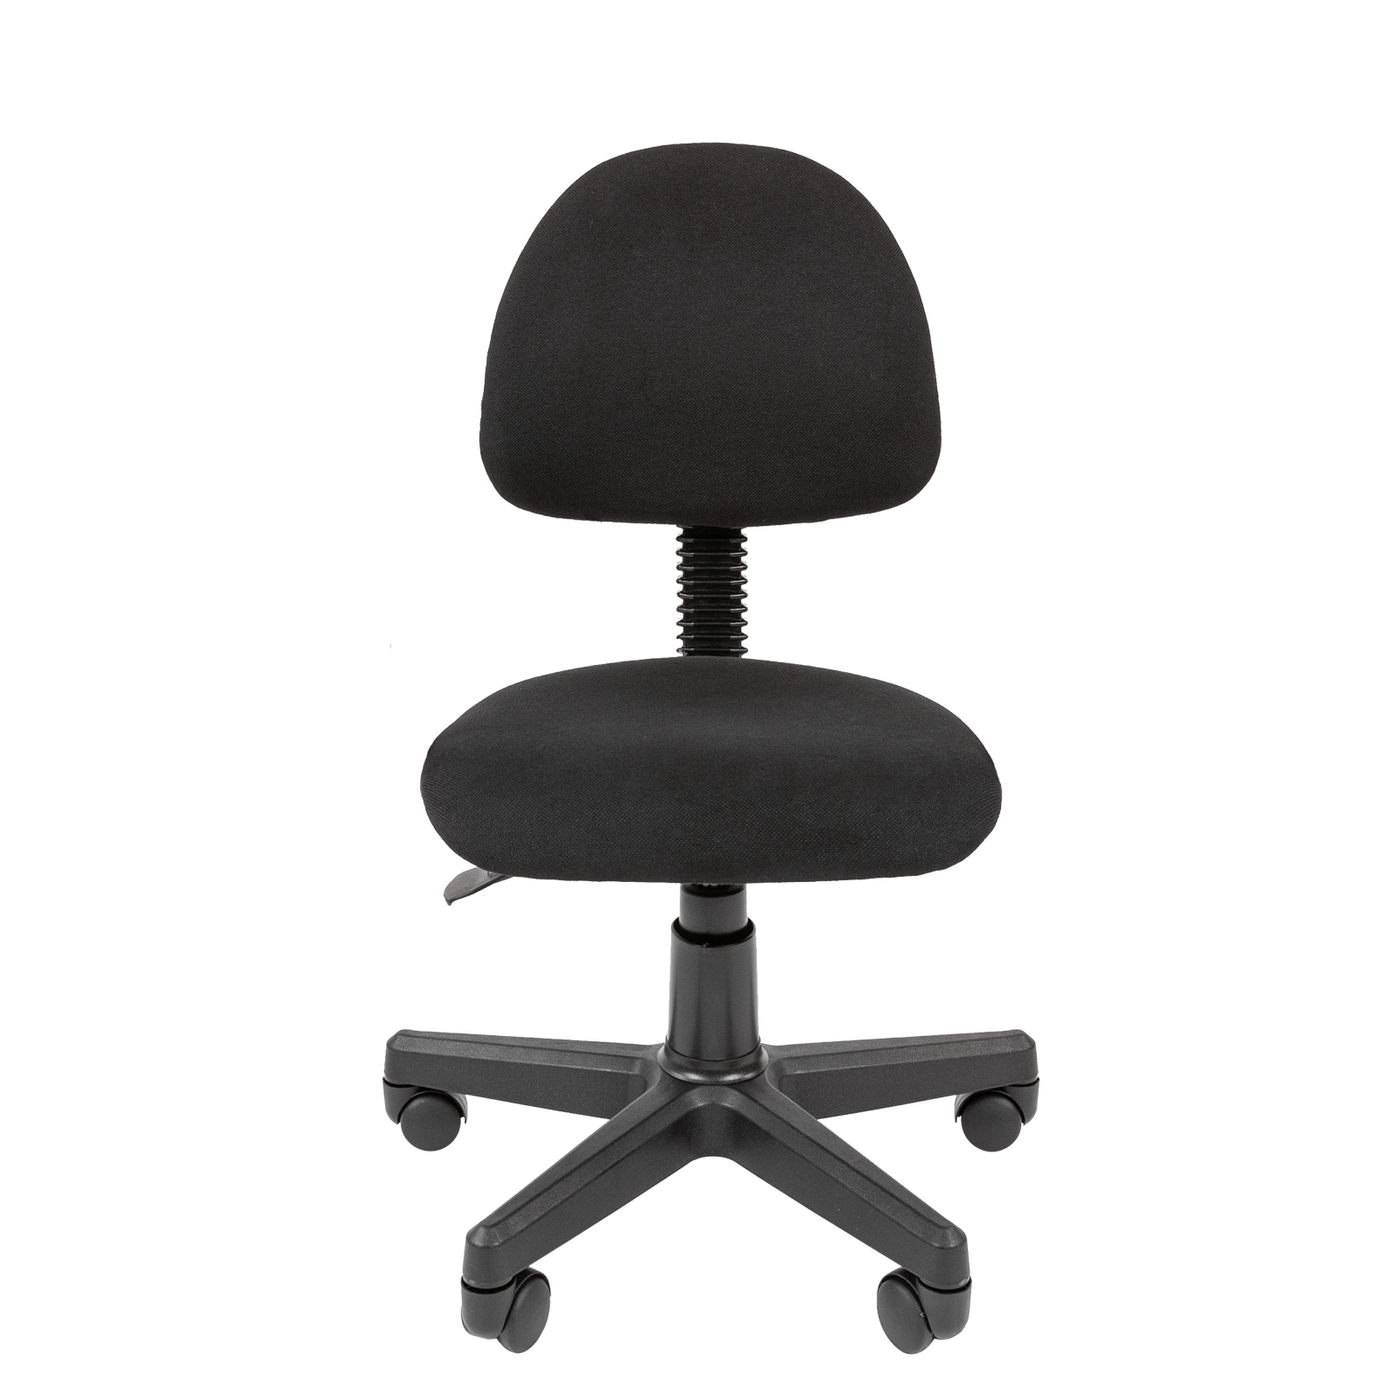 Офисное кресло Chairman стандарт Престиж с-3